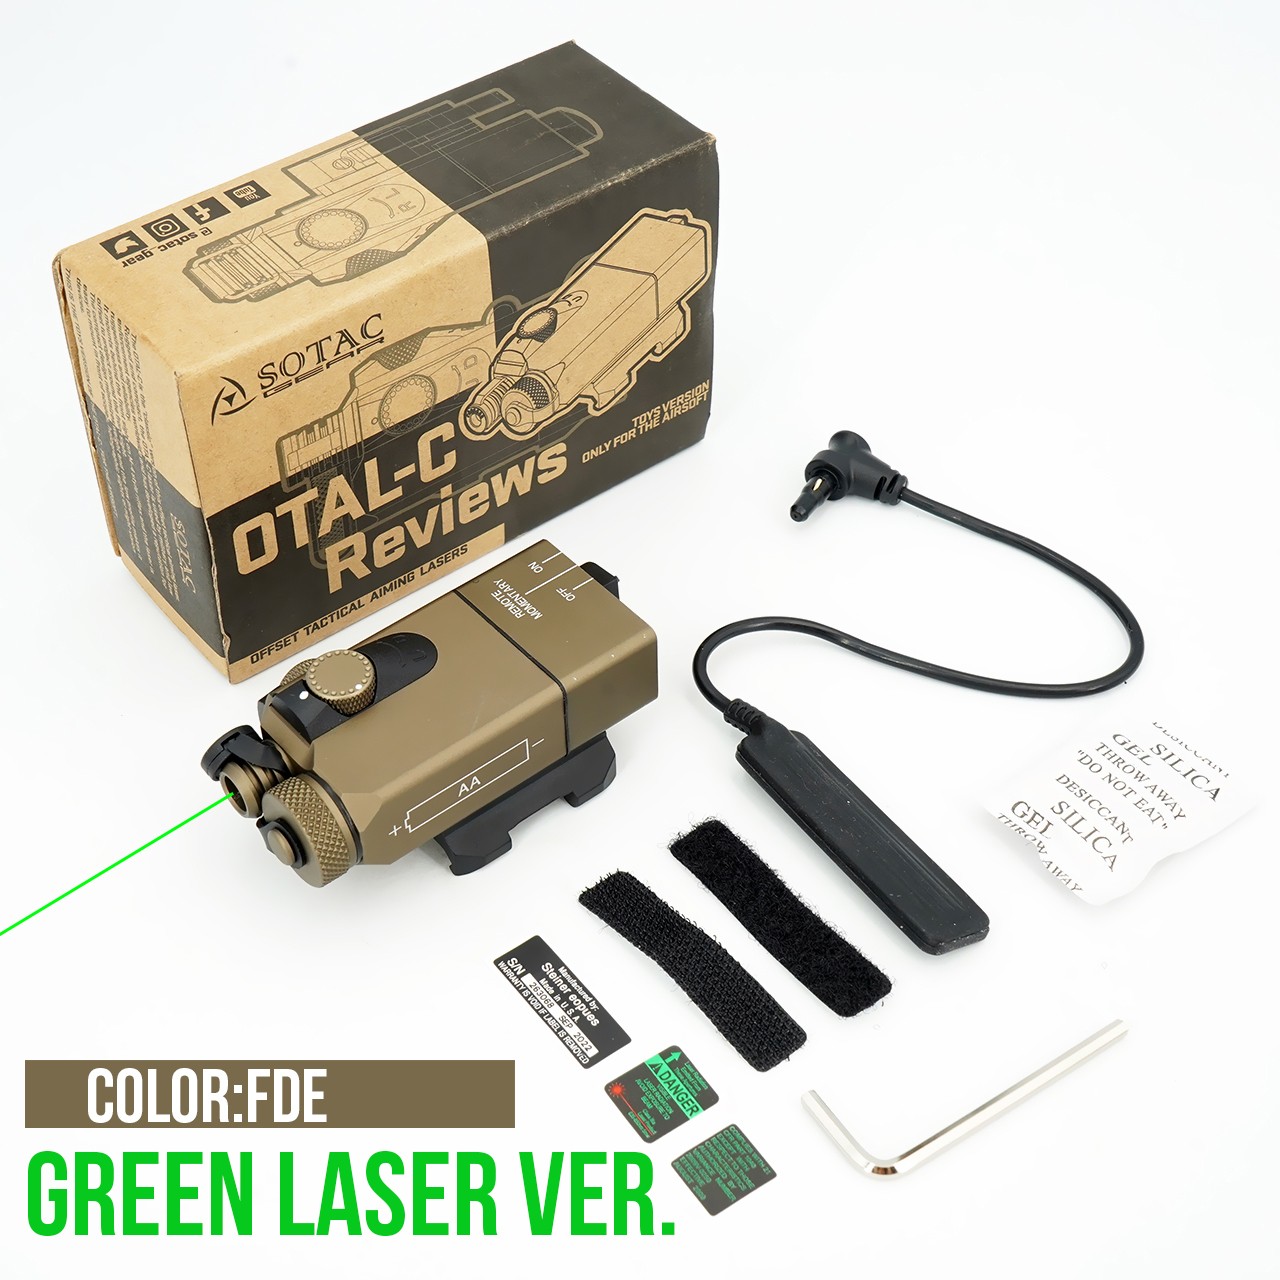 OTAL-C IR Green Laser